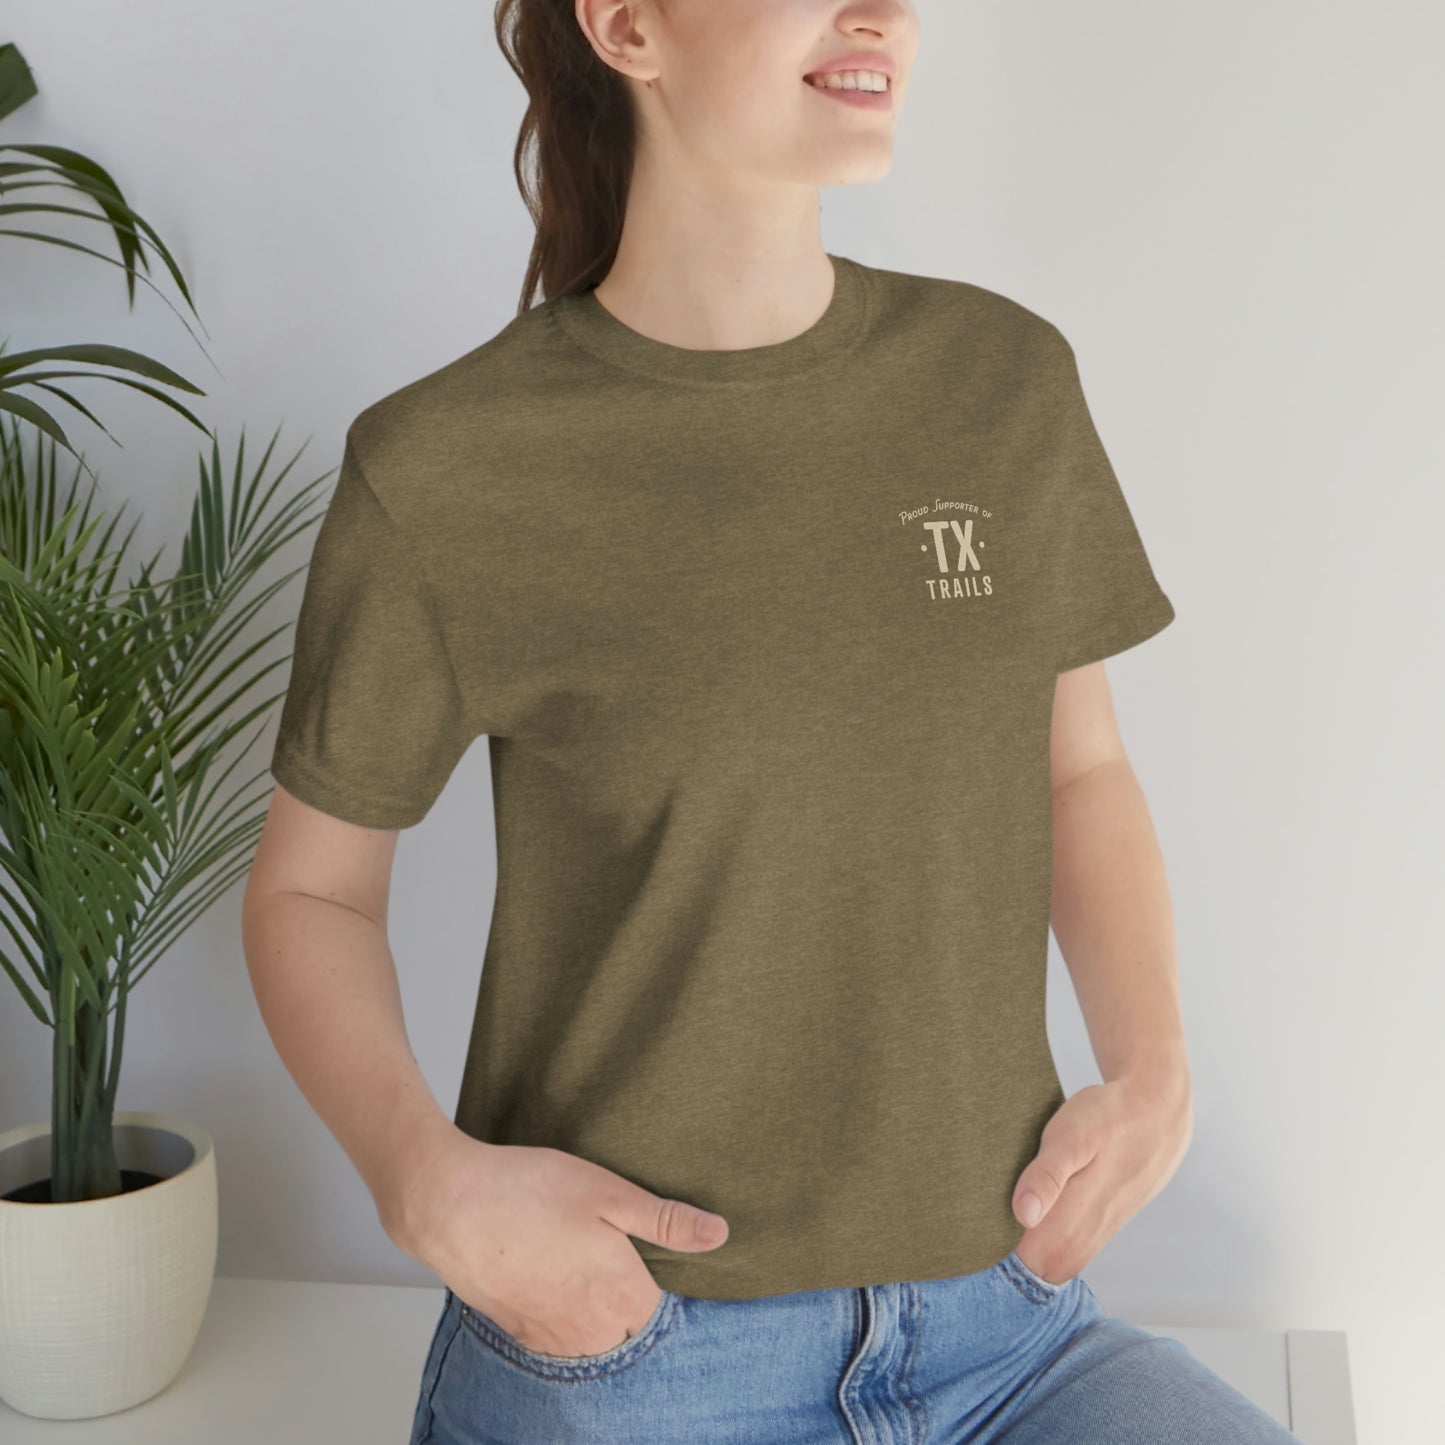 TX Trails Shirt by RDSCo